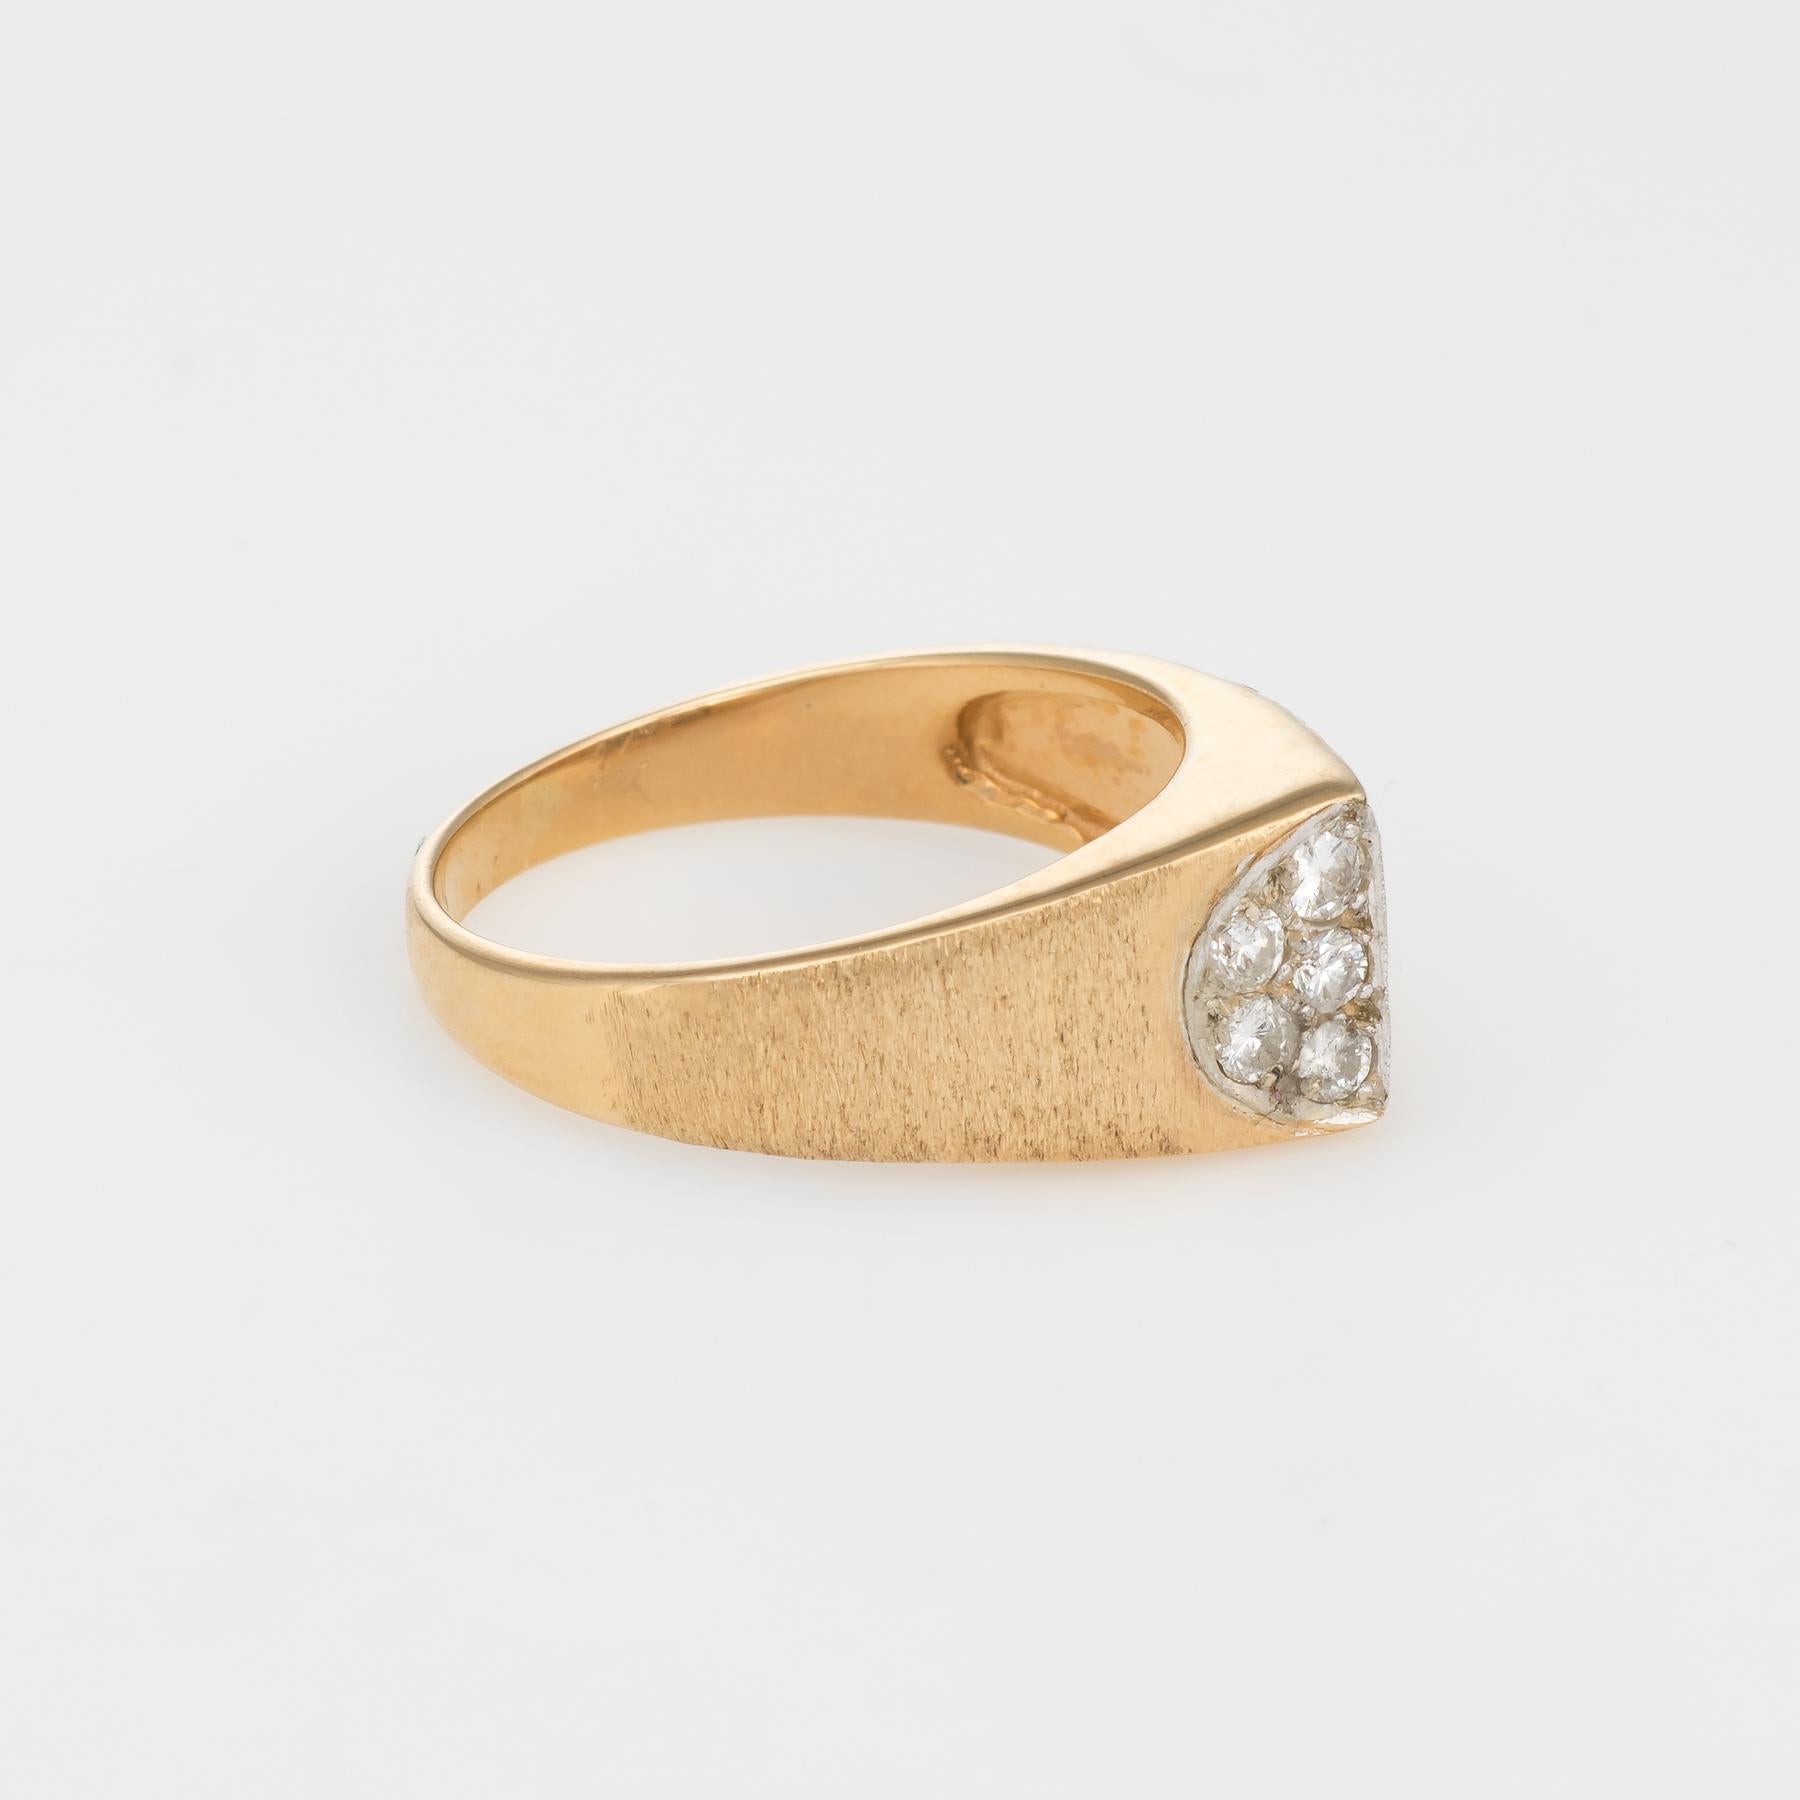 Modern Vintage Pointed Diamond Ring 14k Yellow Gold Estate Fine Jewelry Satin Finish